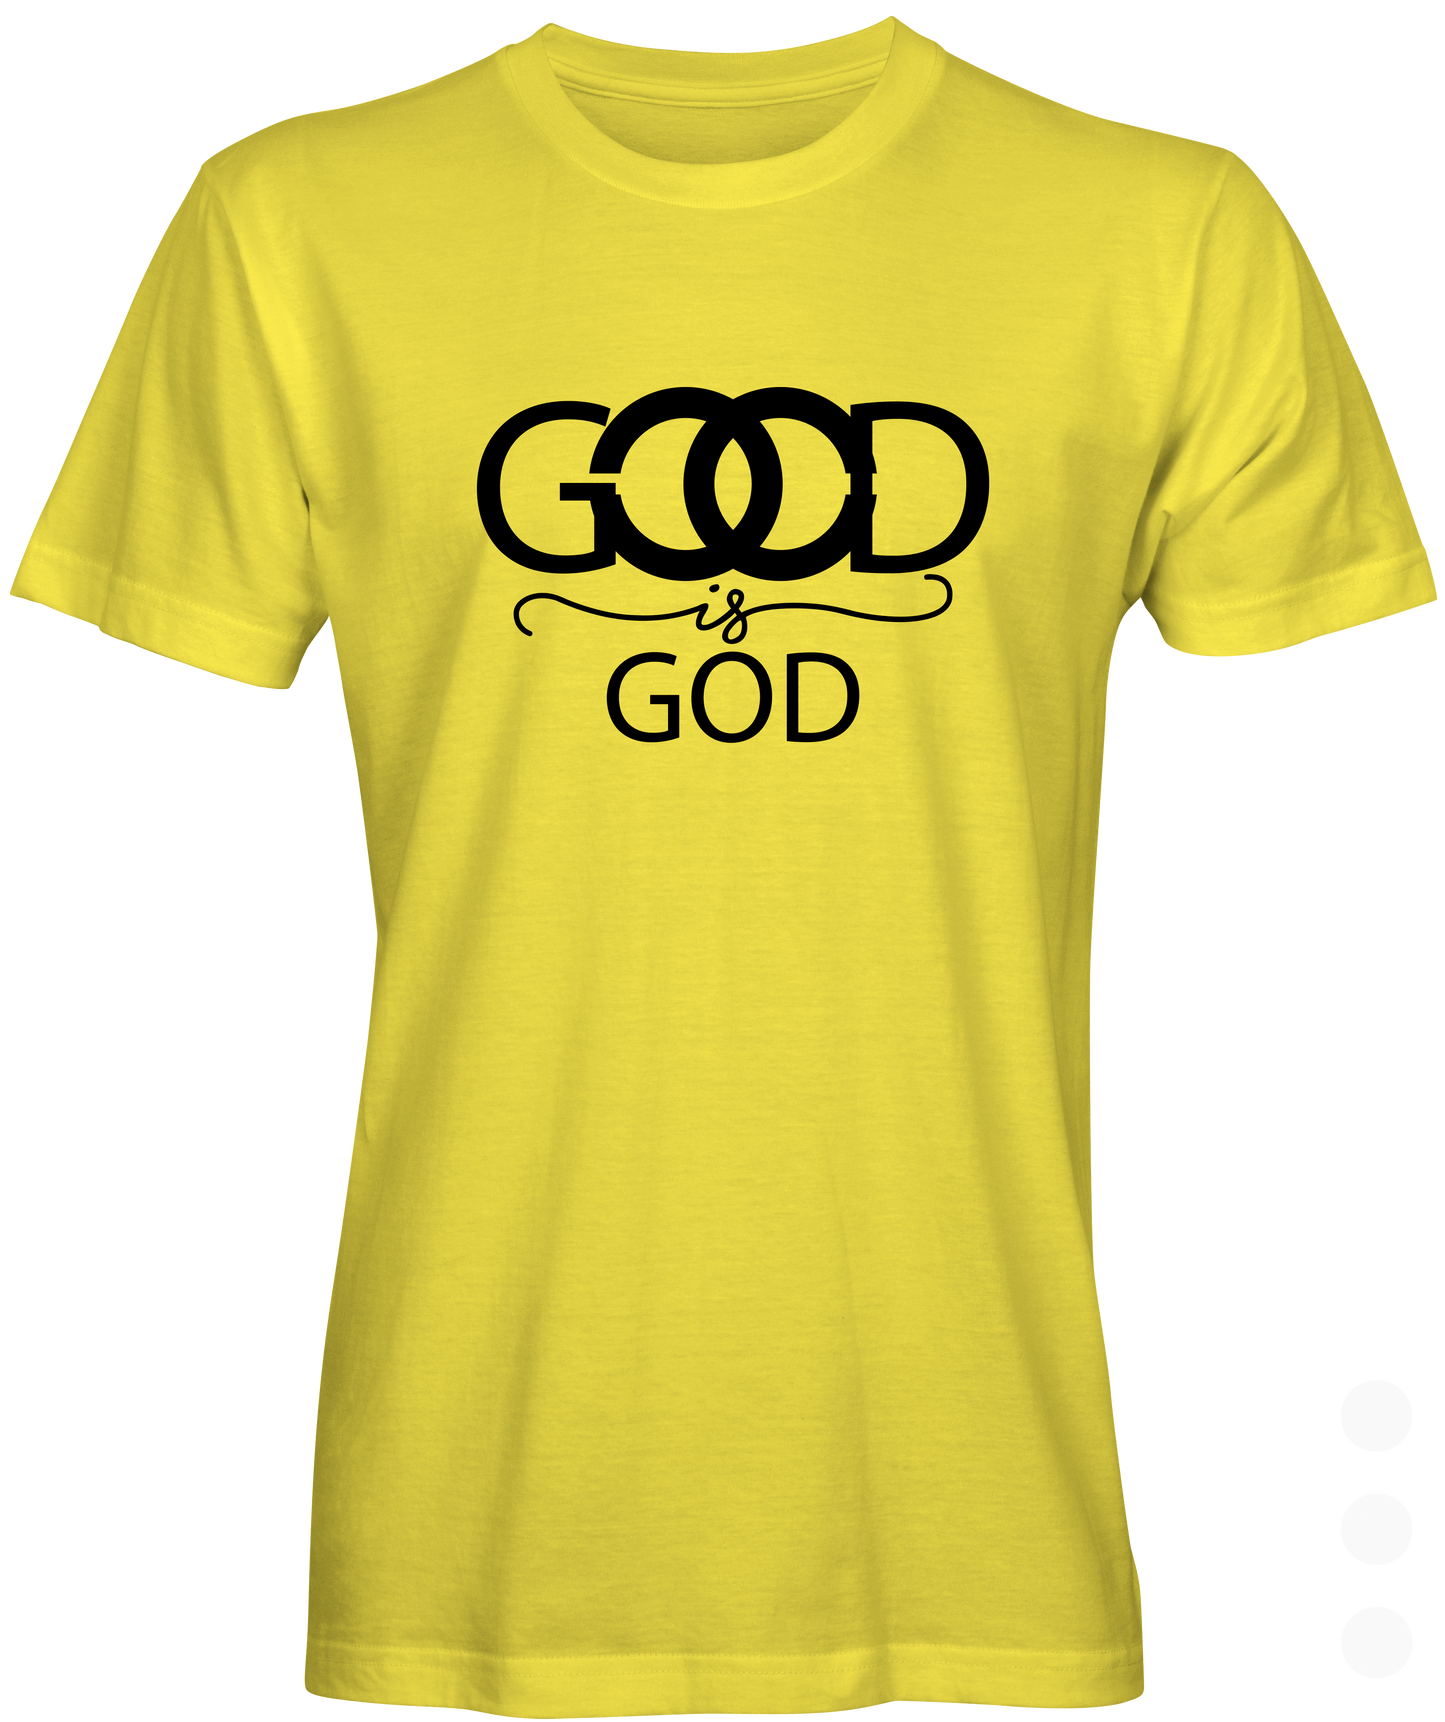 Yellow T-shirt with Slogan